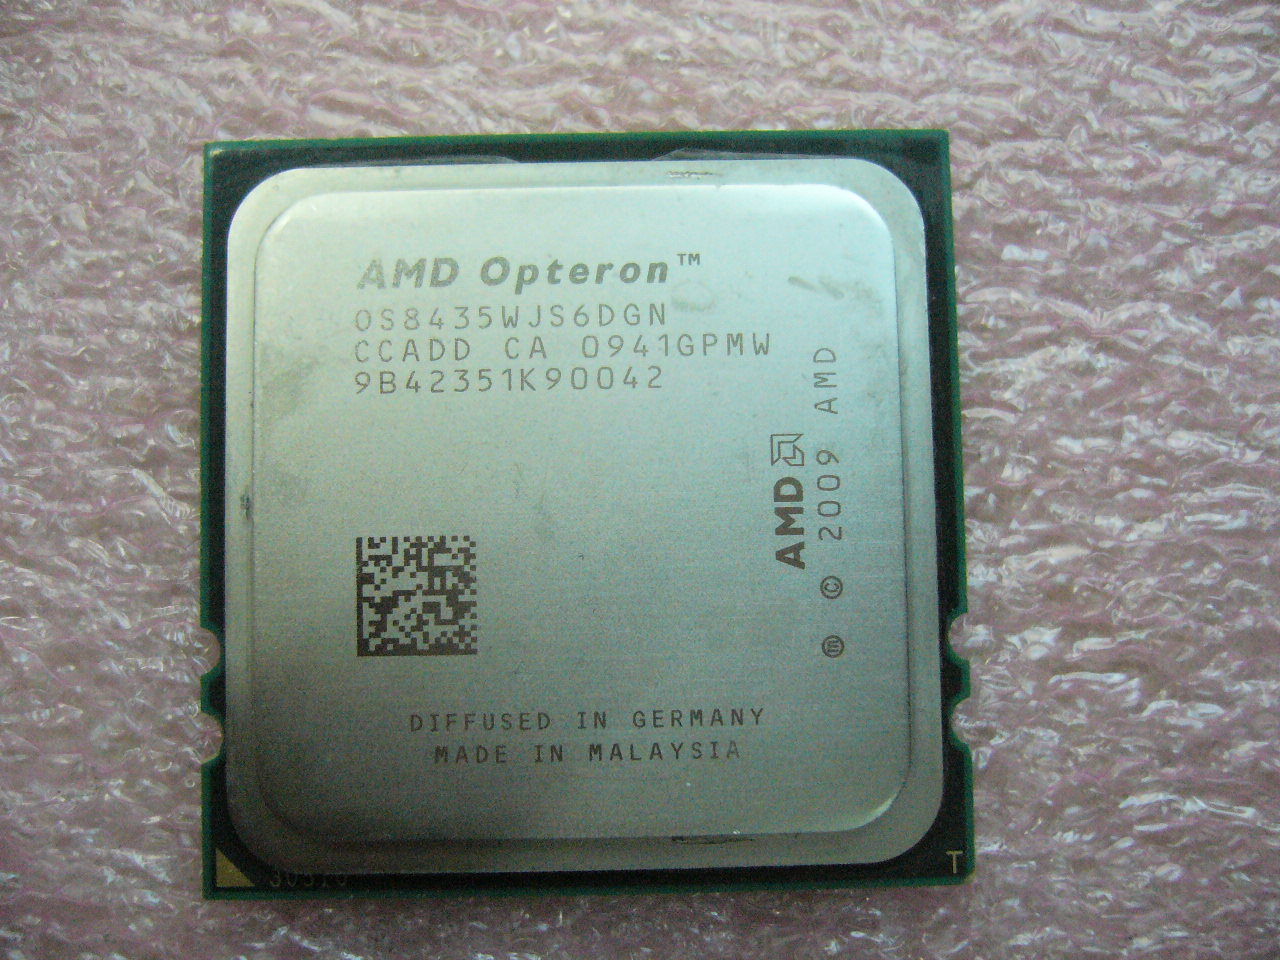 QTY 1x AMD Opteron 8435 2.6 GHz Six Core (OS8435WJS6DGN) CPU Socket F 1207 - zum Schließen ins Bild klicken